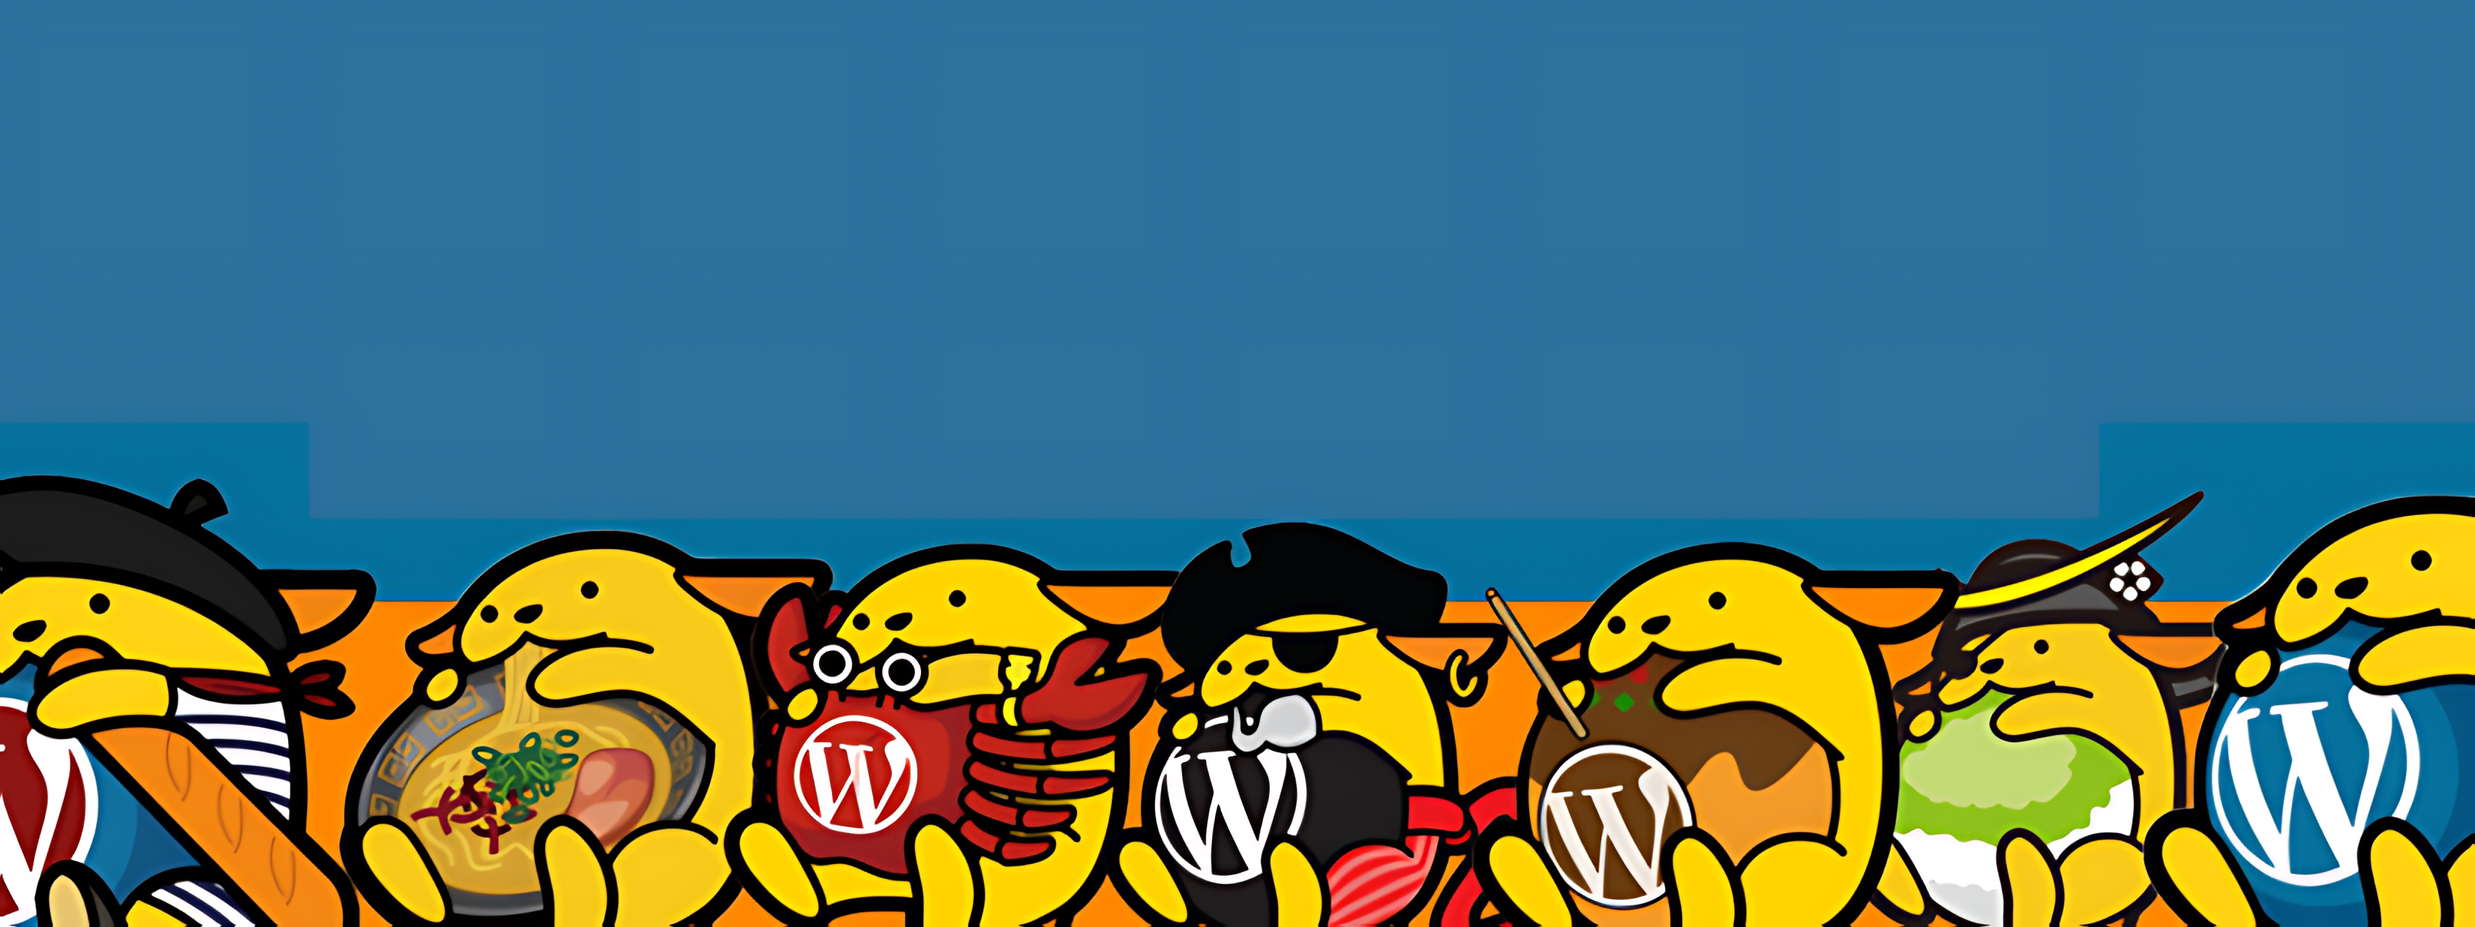 Wapuu 的由来以及和 WordPress 的关系。